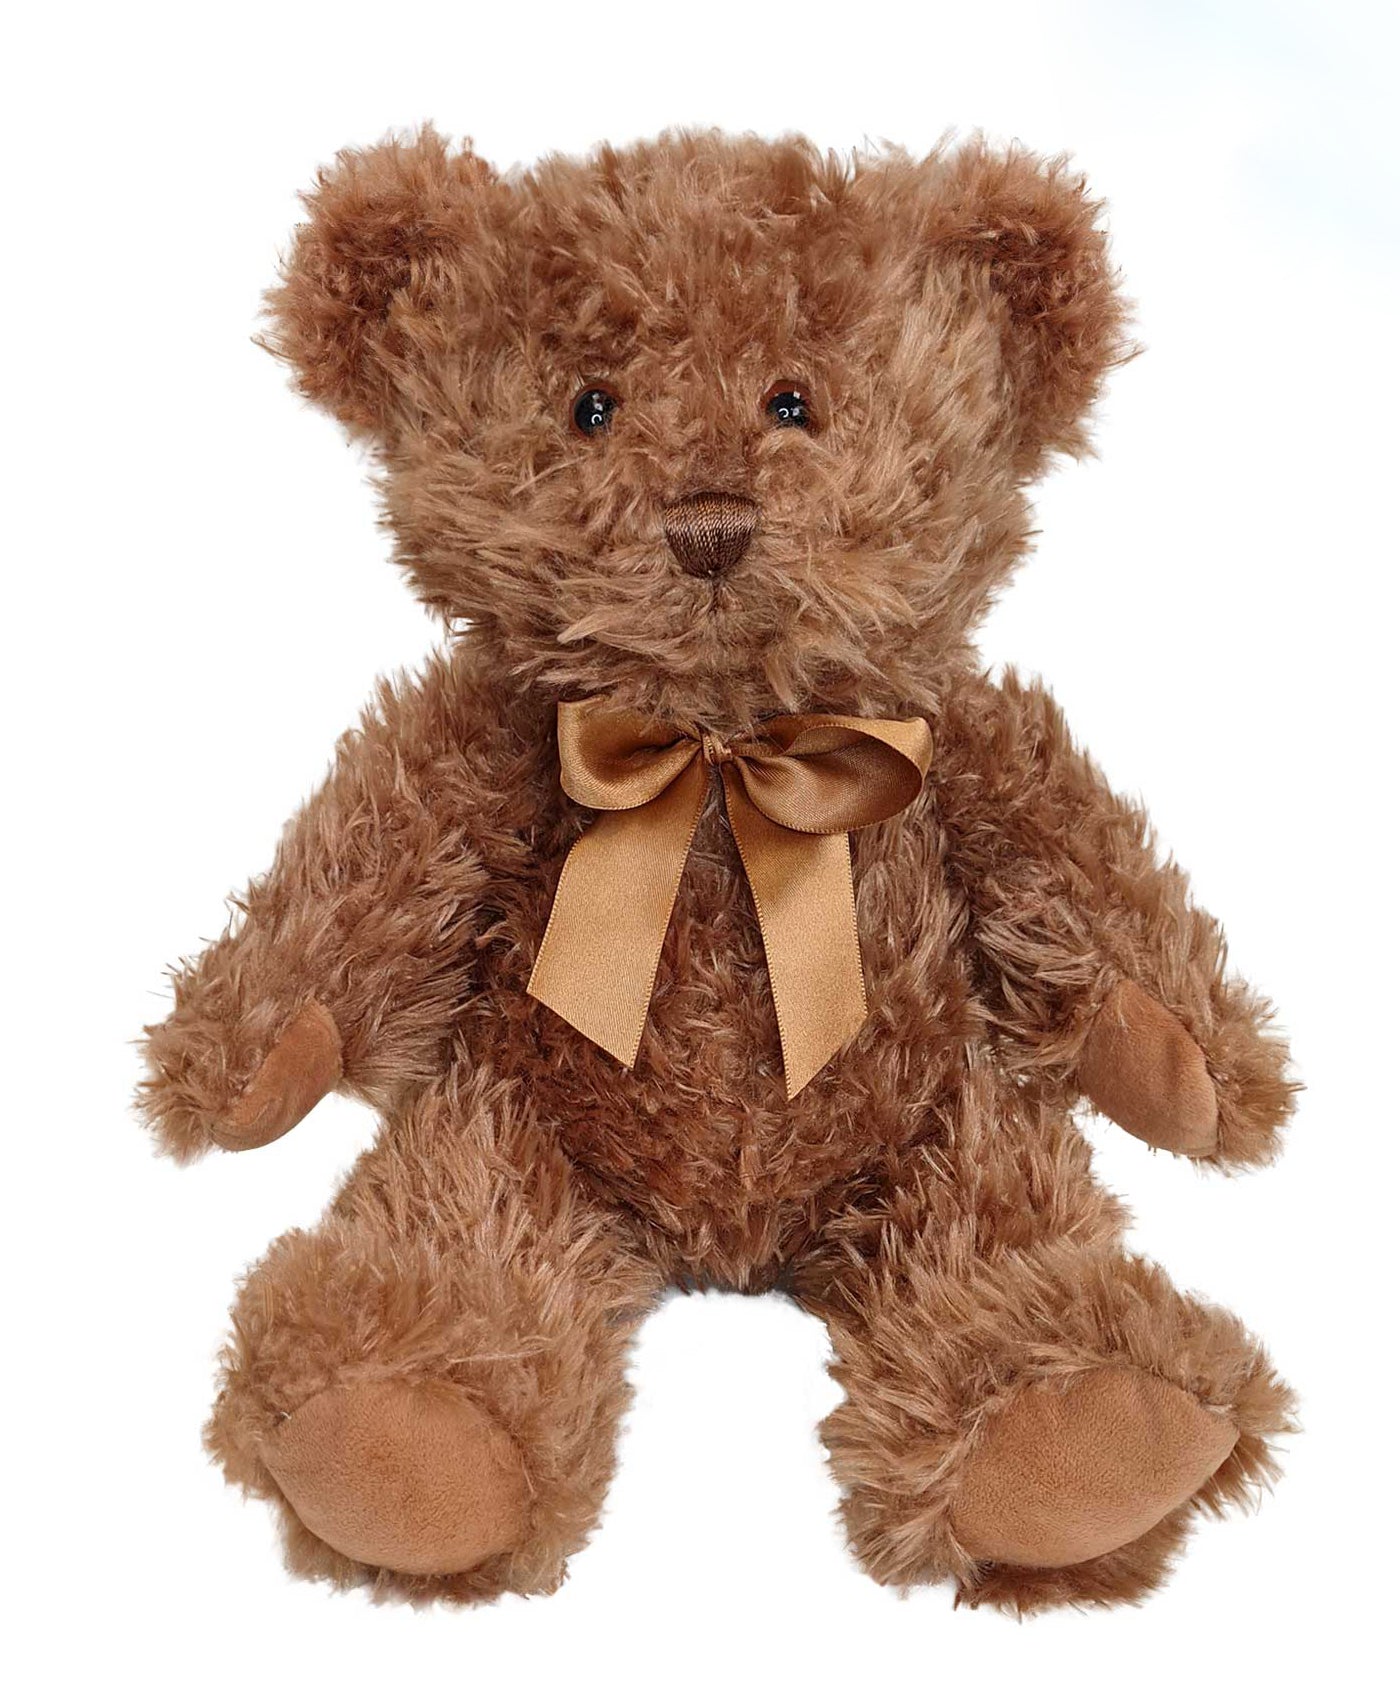 Super Soft Brown Teddy Bear